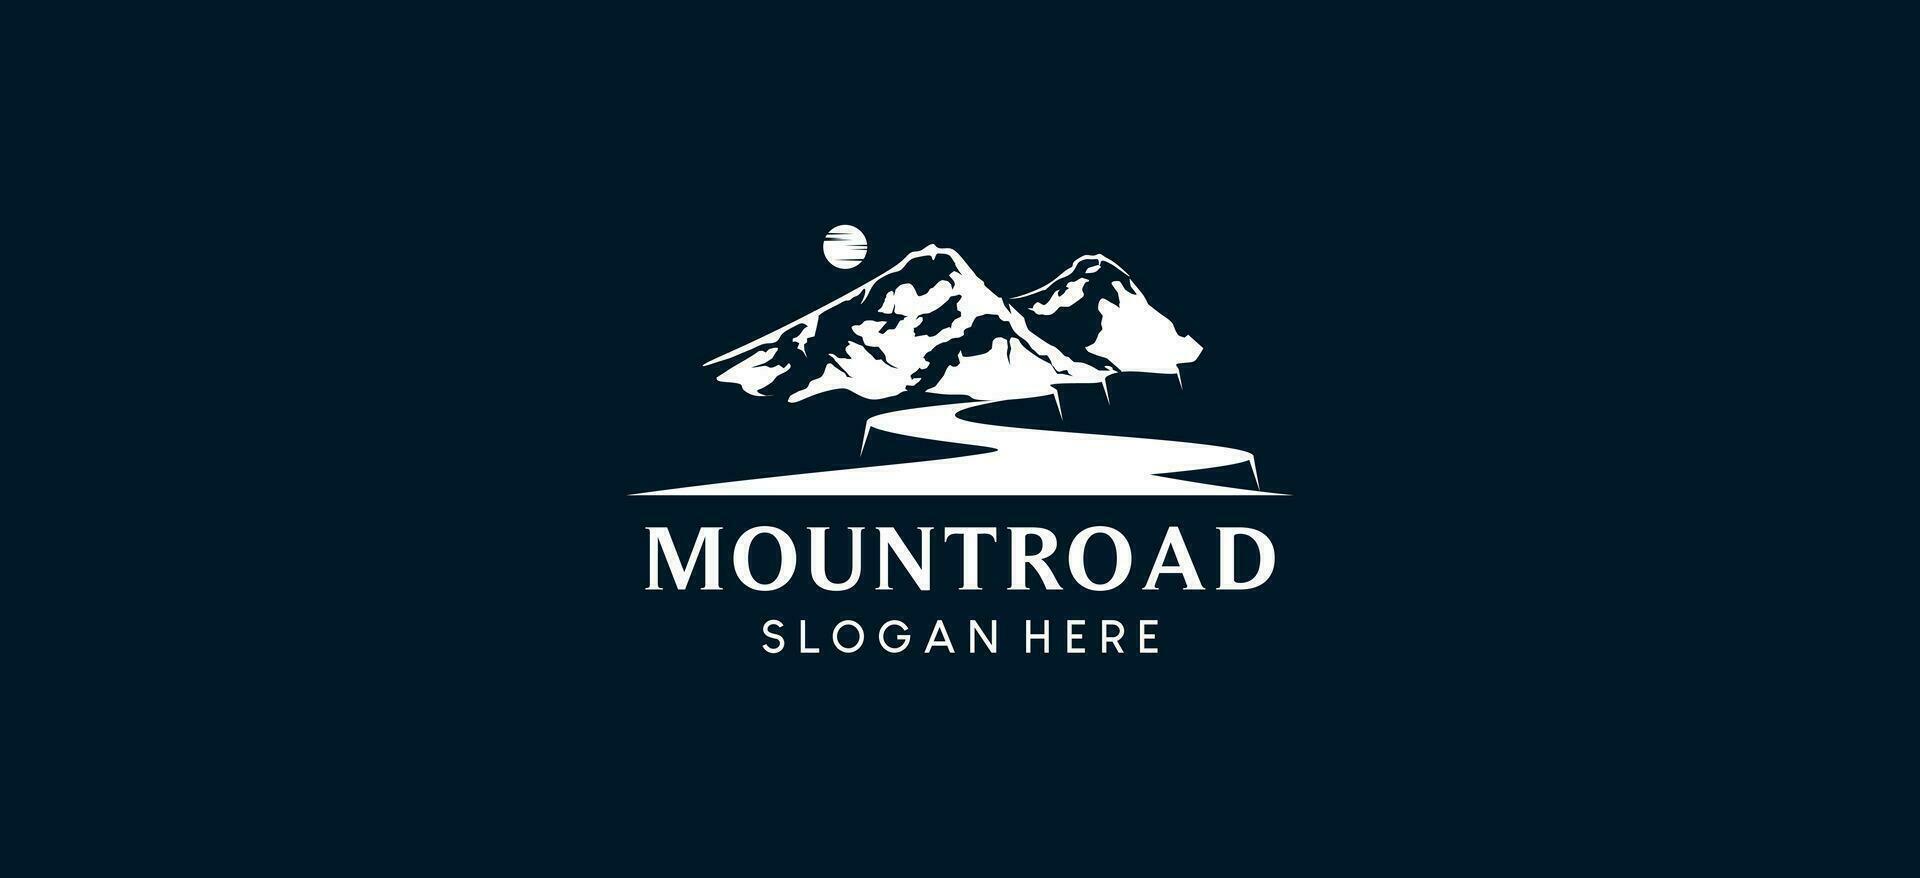 Winding road mountain logo design vector illustration